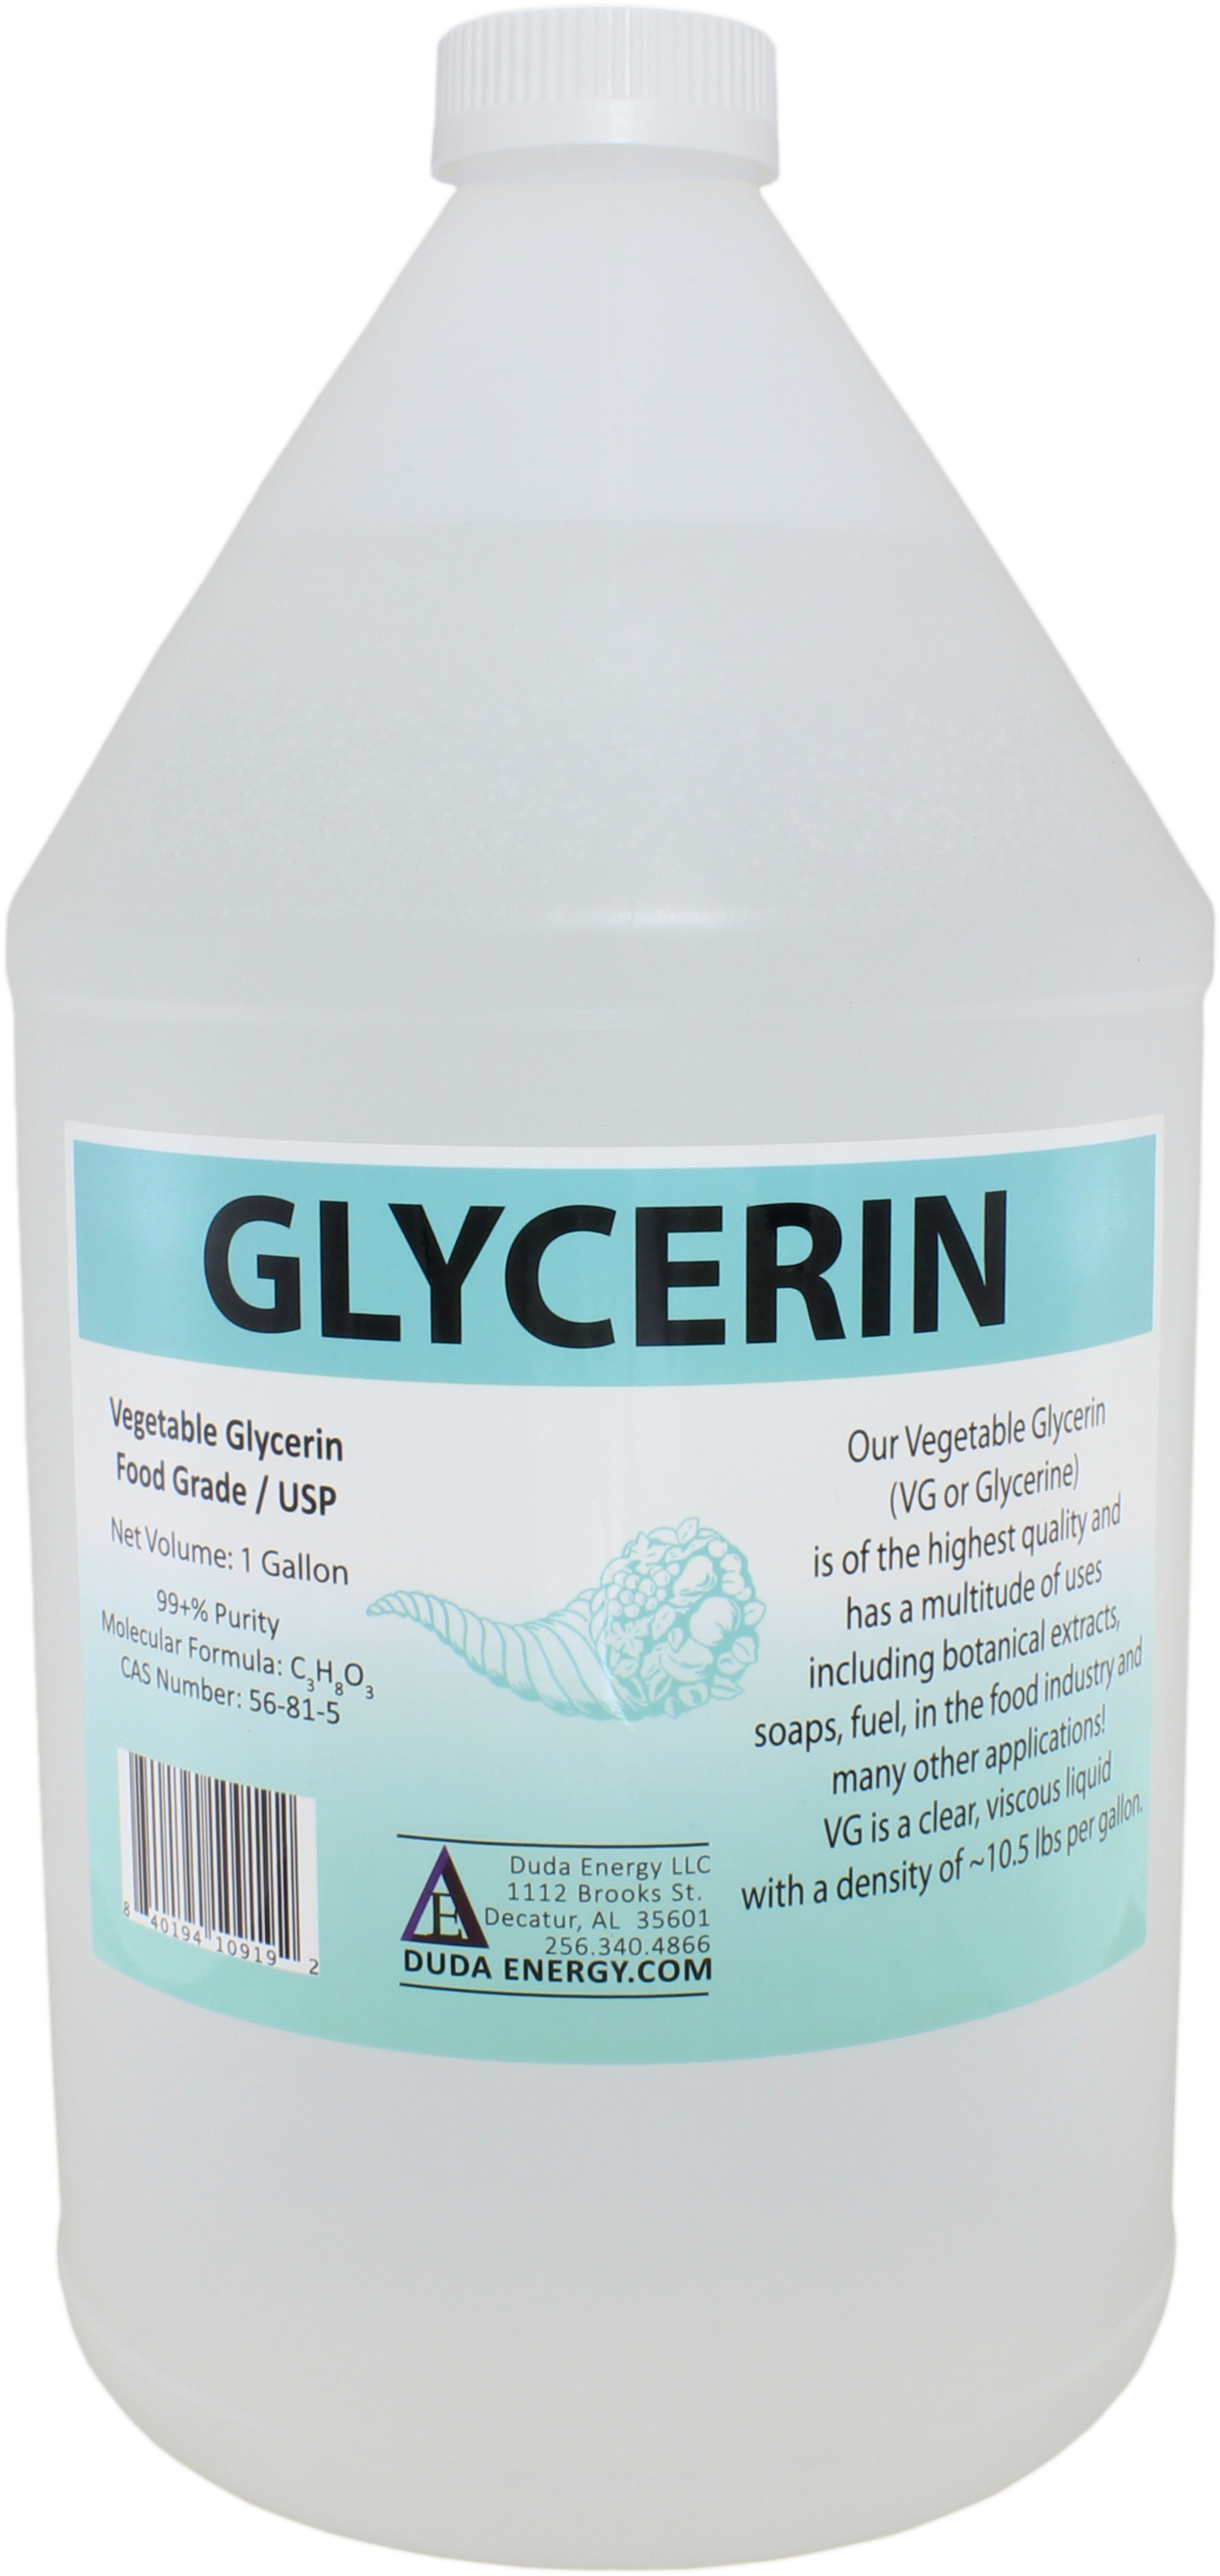 Non-GMO Vegetable Glycerin Food Grade USP Palm Fruit Based